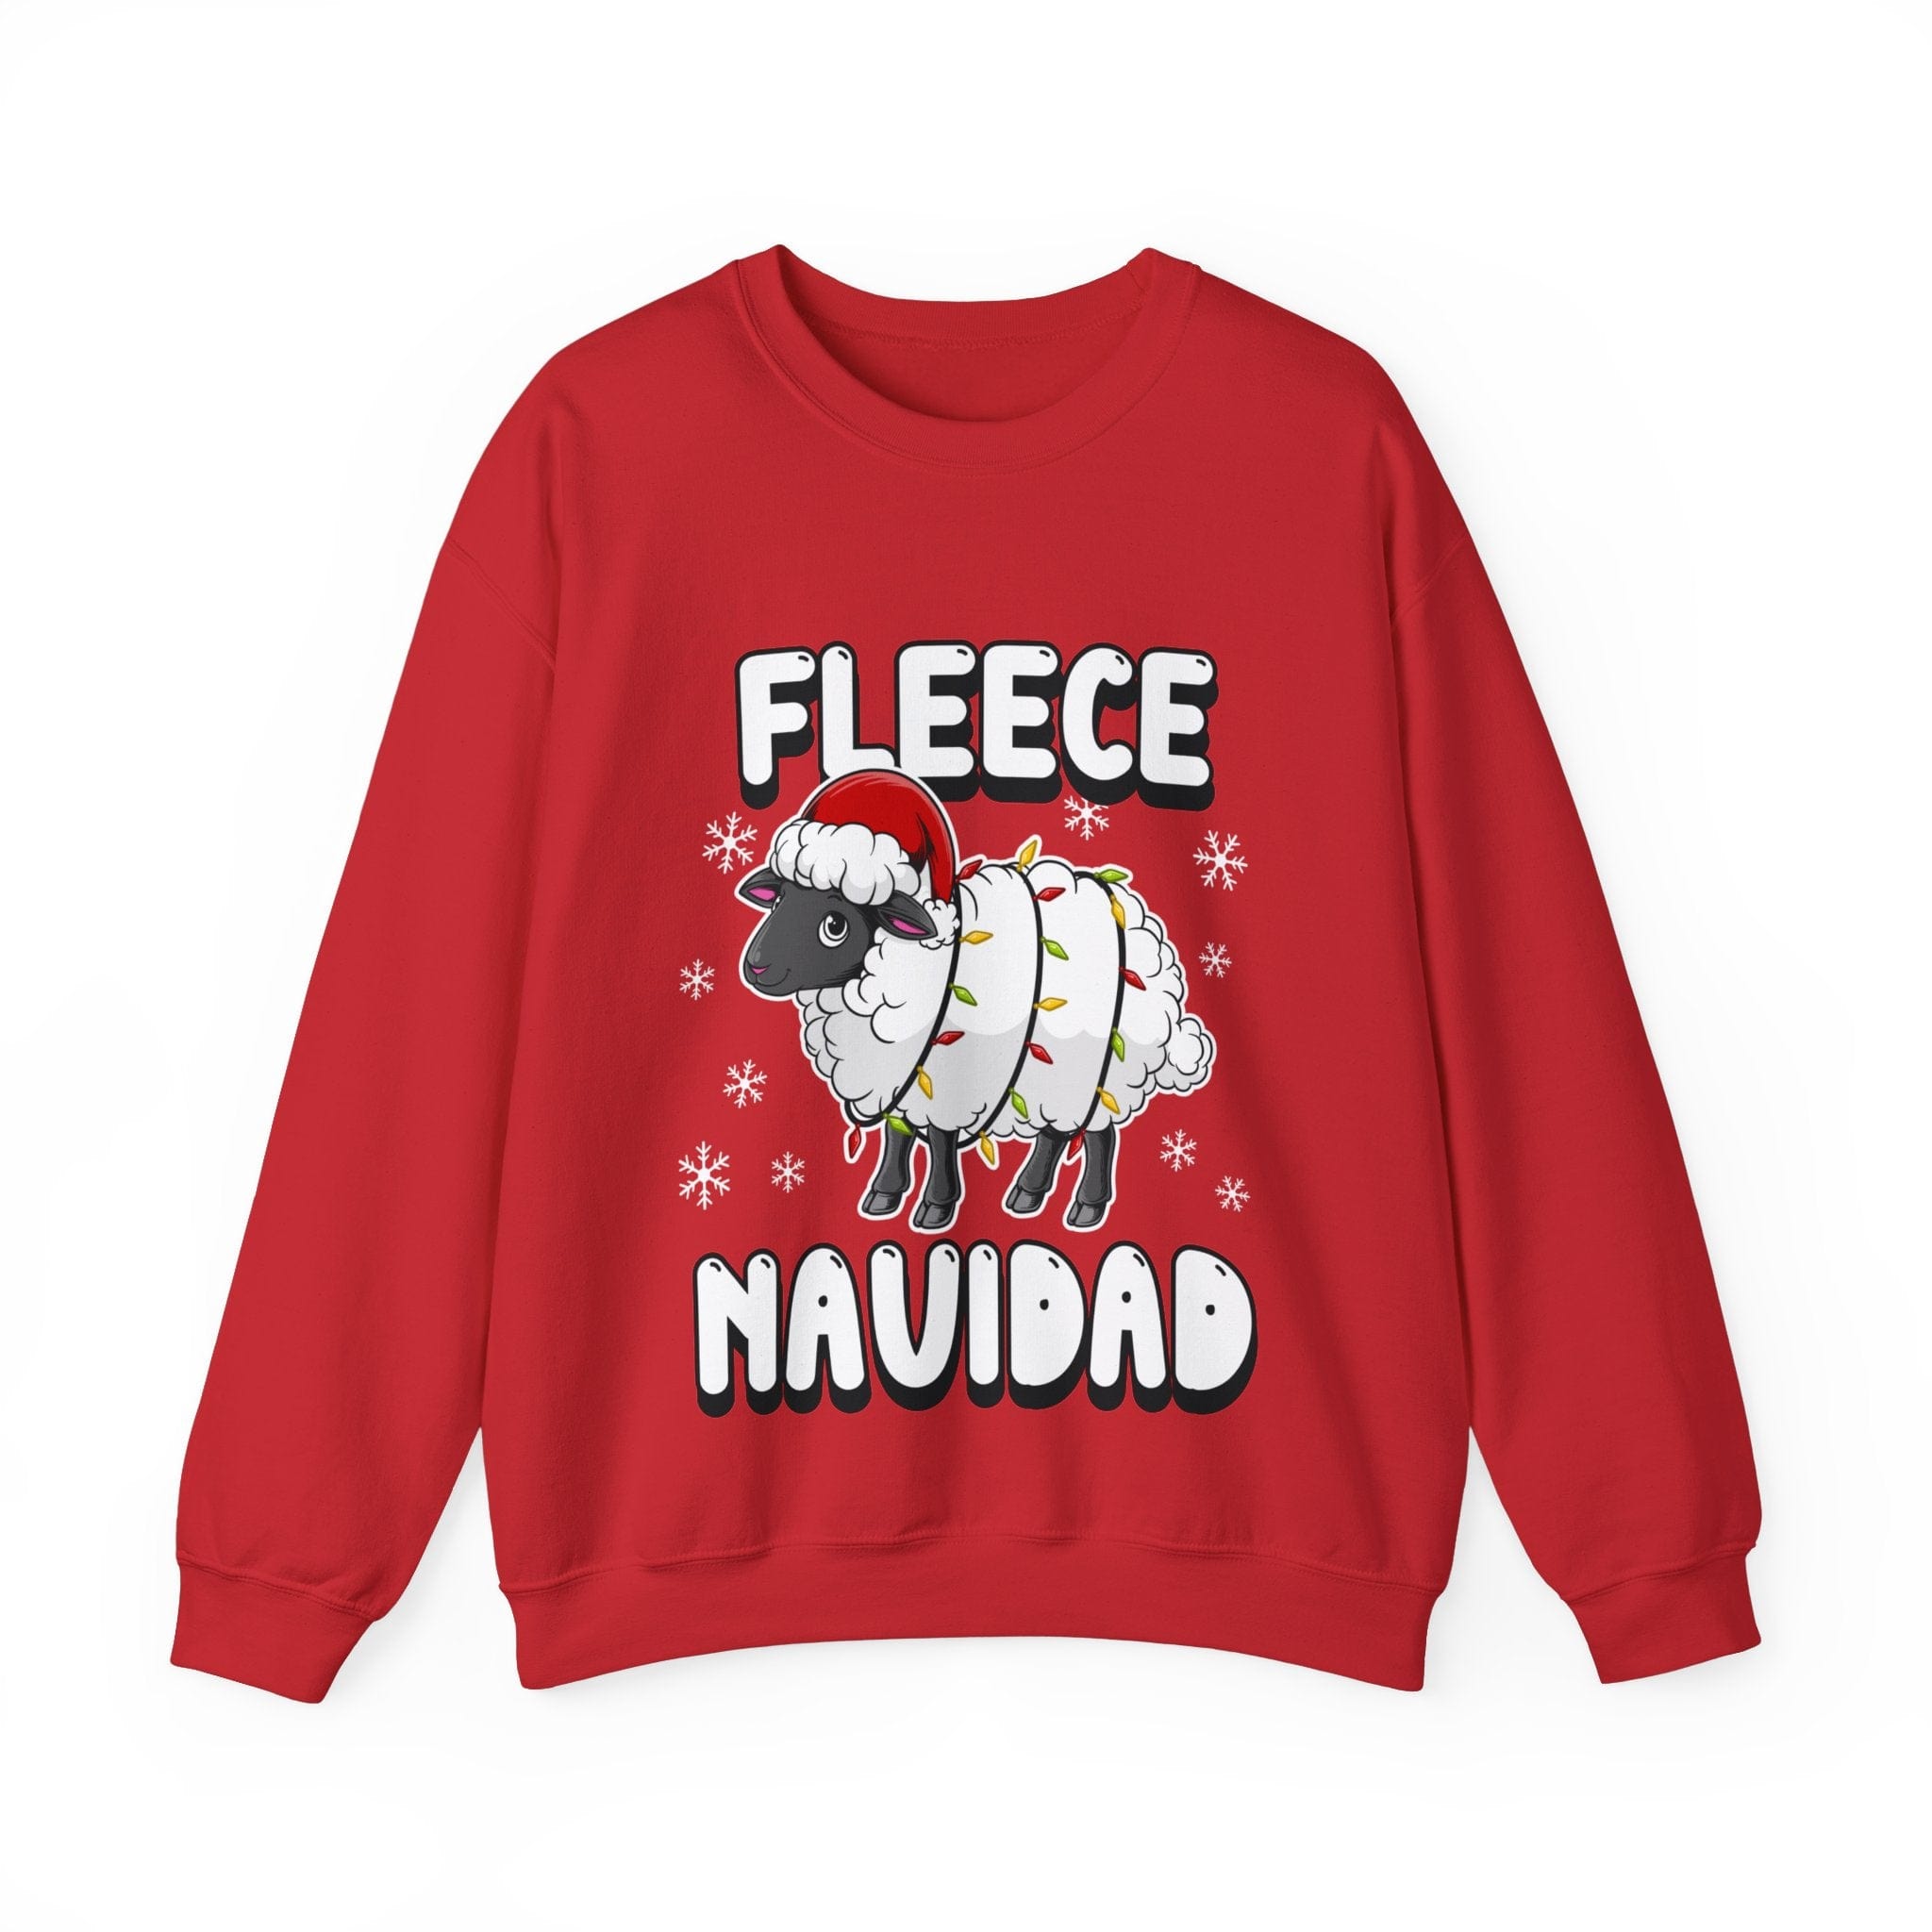 Fleece Navidad Sweatshirt